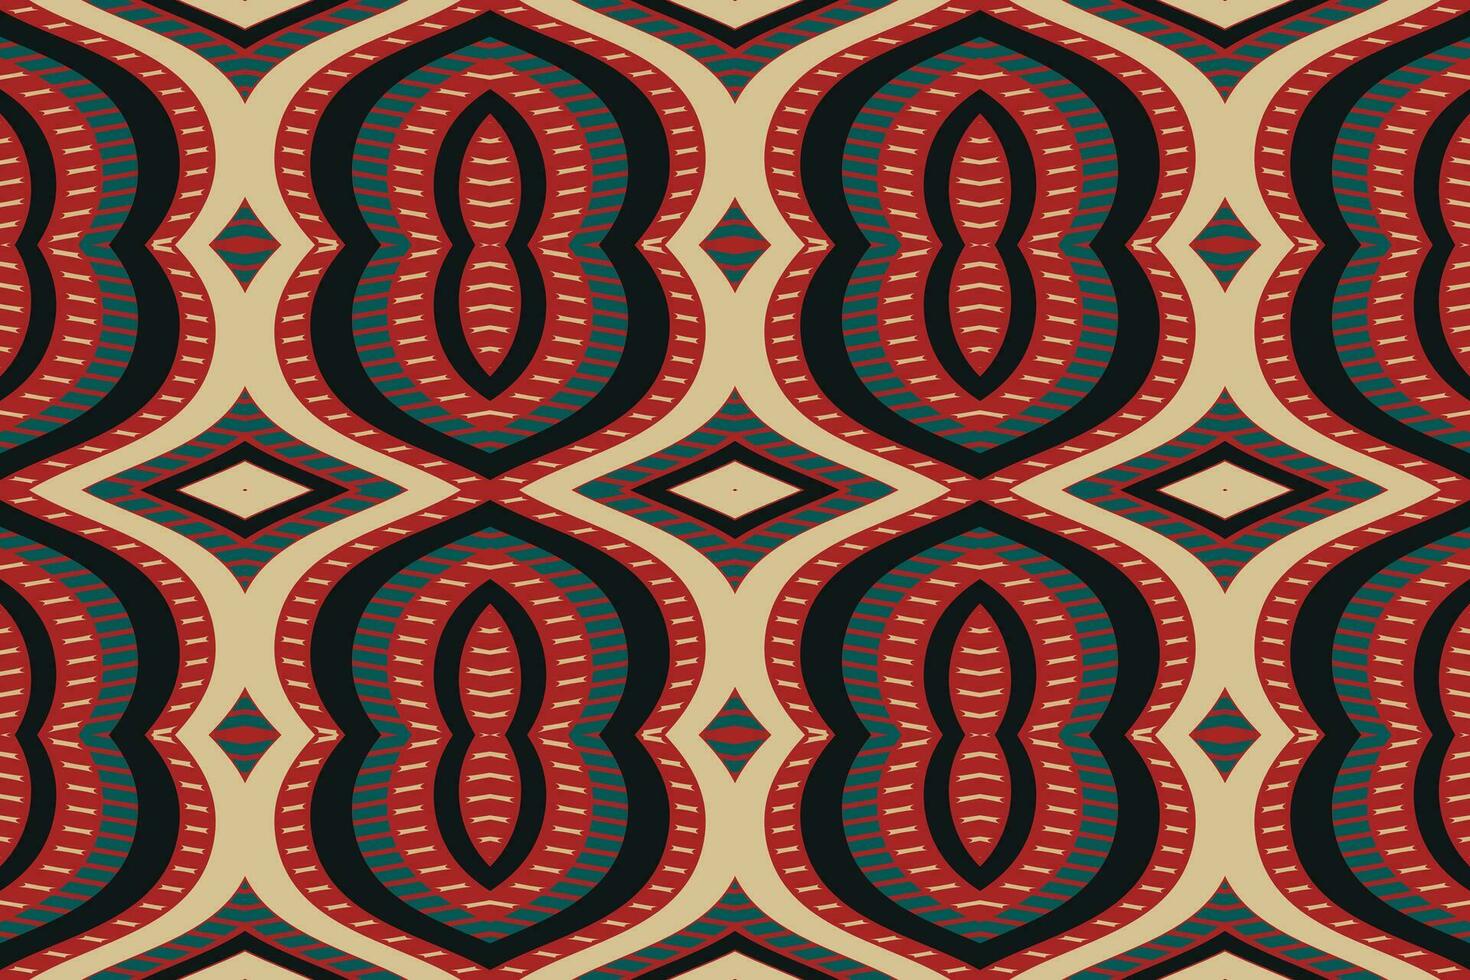 ikat blommig paisley broderi bakgrund. ikat sömlös mönster geometrisk etnisk orientalisk mönster traditionell.aztec stil abstrakt vektor design textur, tyg, kläder, inslagning, sarong.